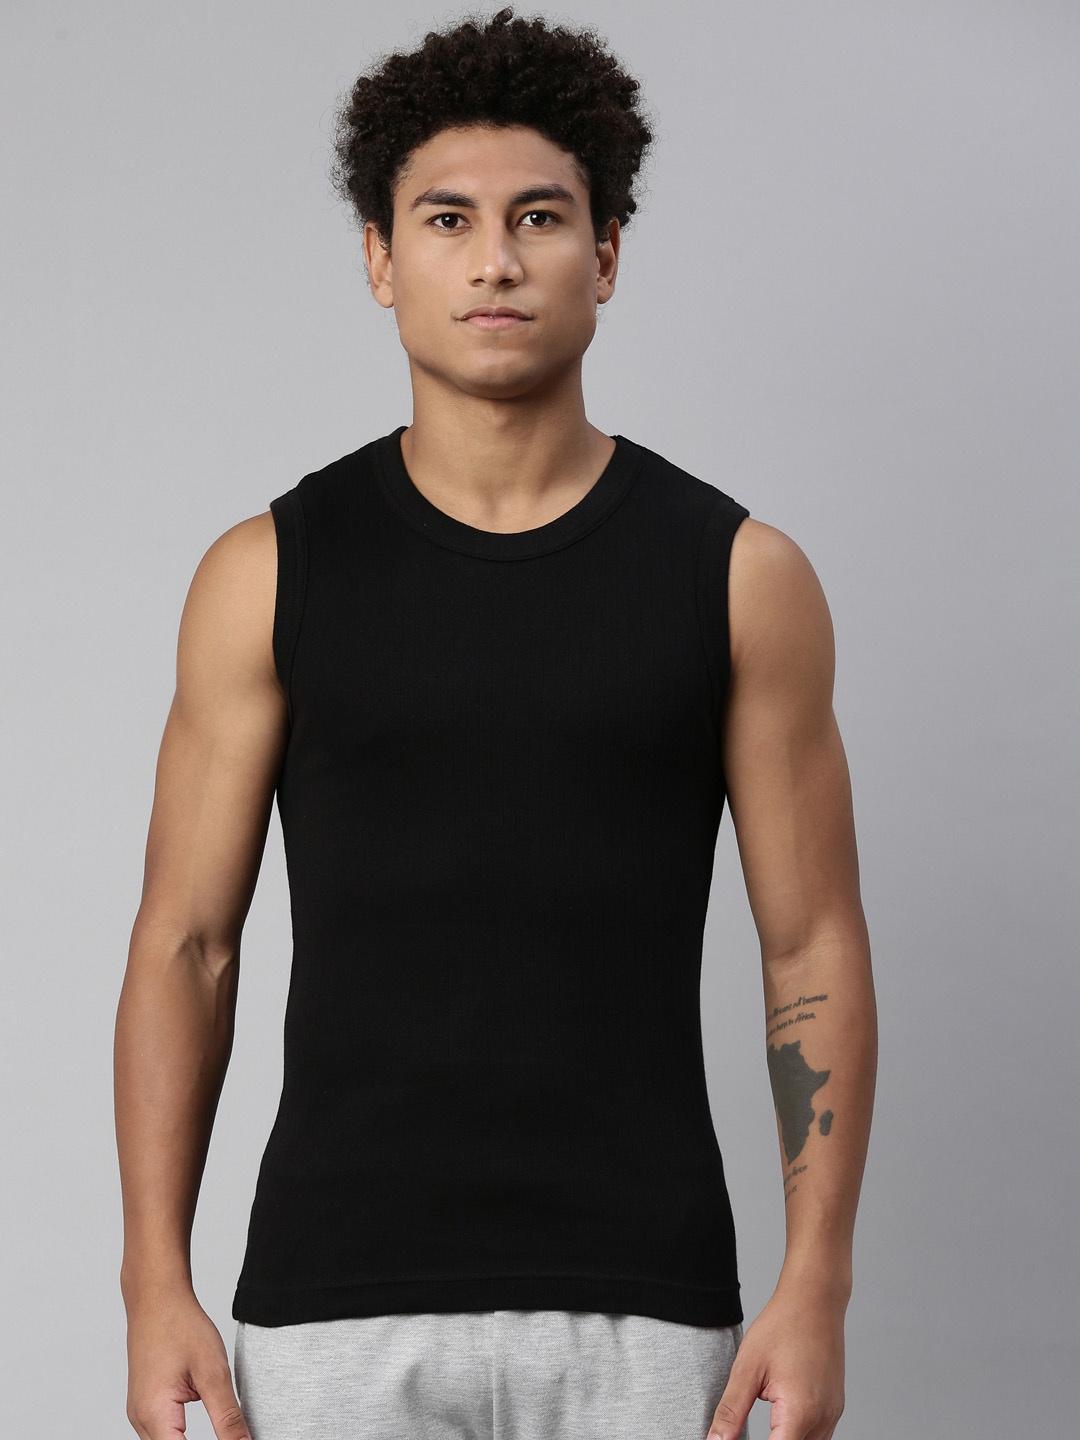 levis-men-smartskin-technology-cotton-gym-vests-with-tag-free-comfort-014